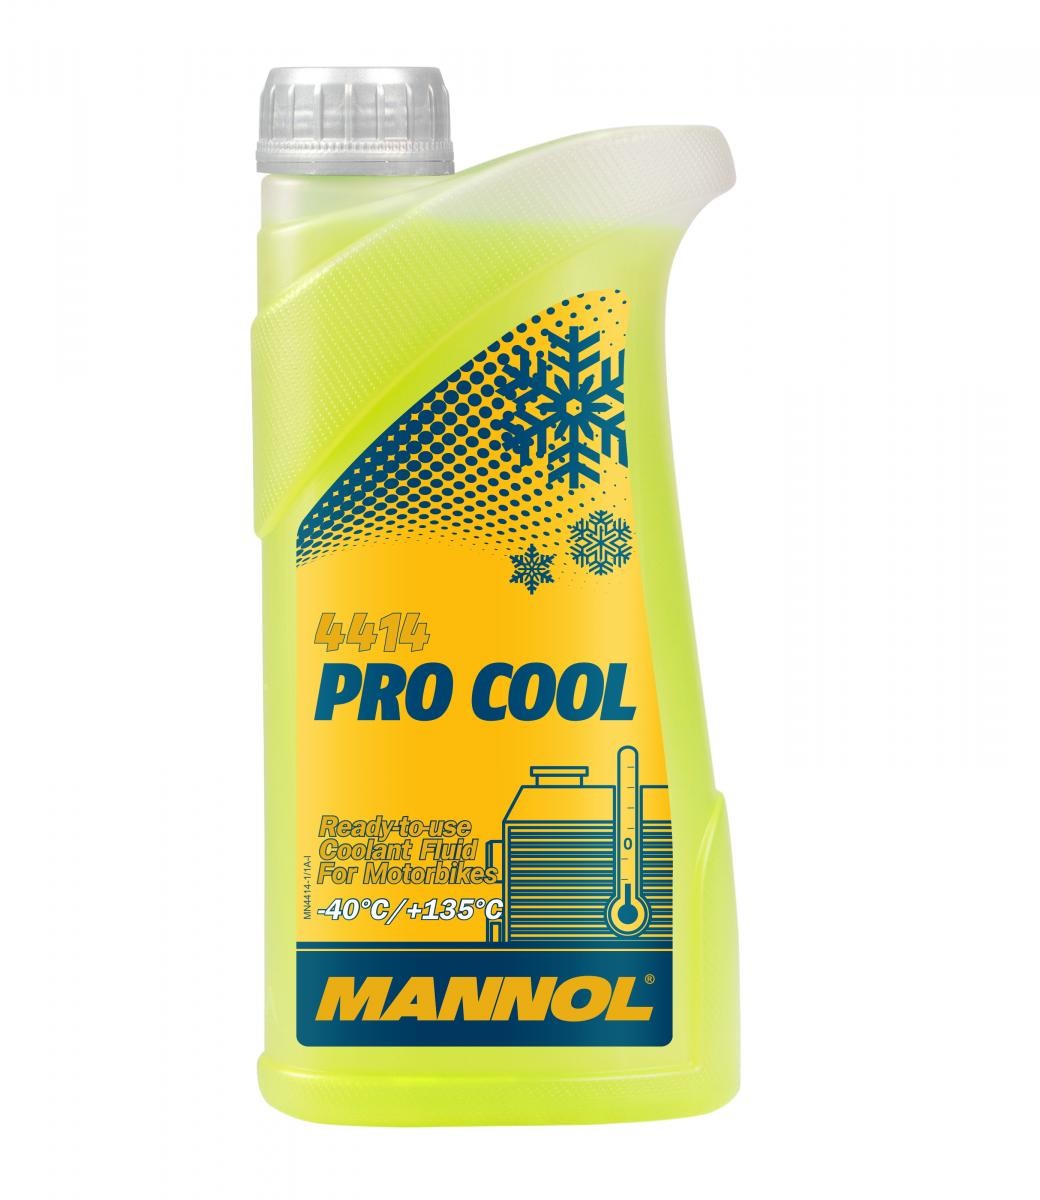 Motorrad MANNOL Pro Cool G13 gelb, 1l G13 Kühlmittel MN4414-1 günstig kaufen